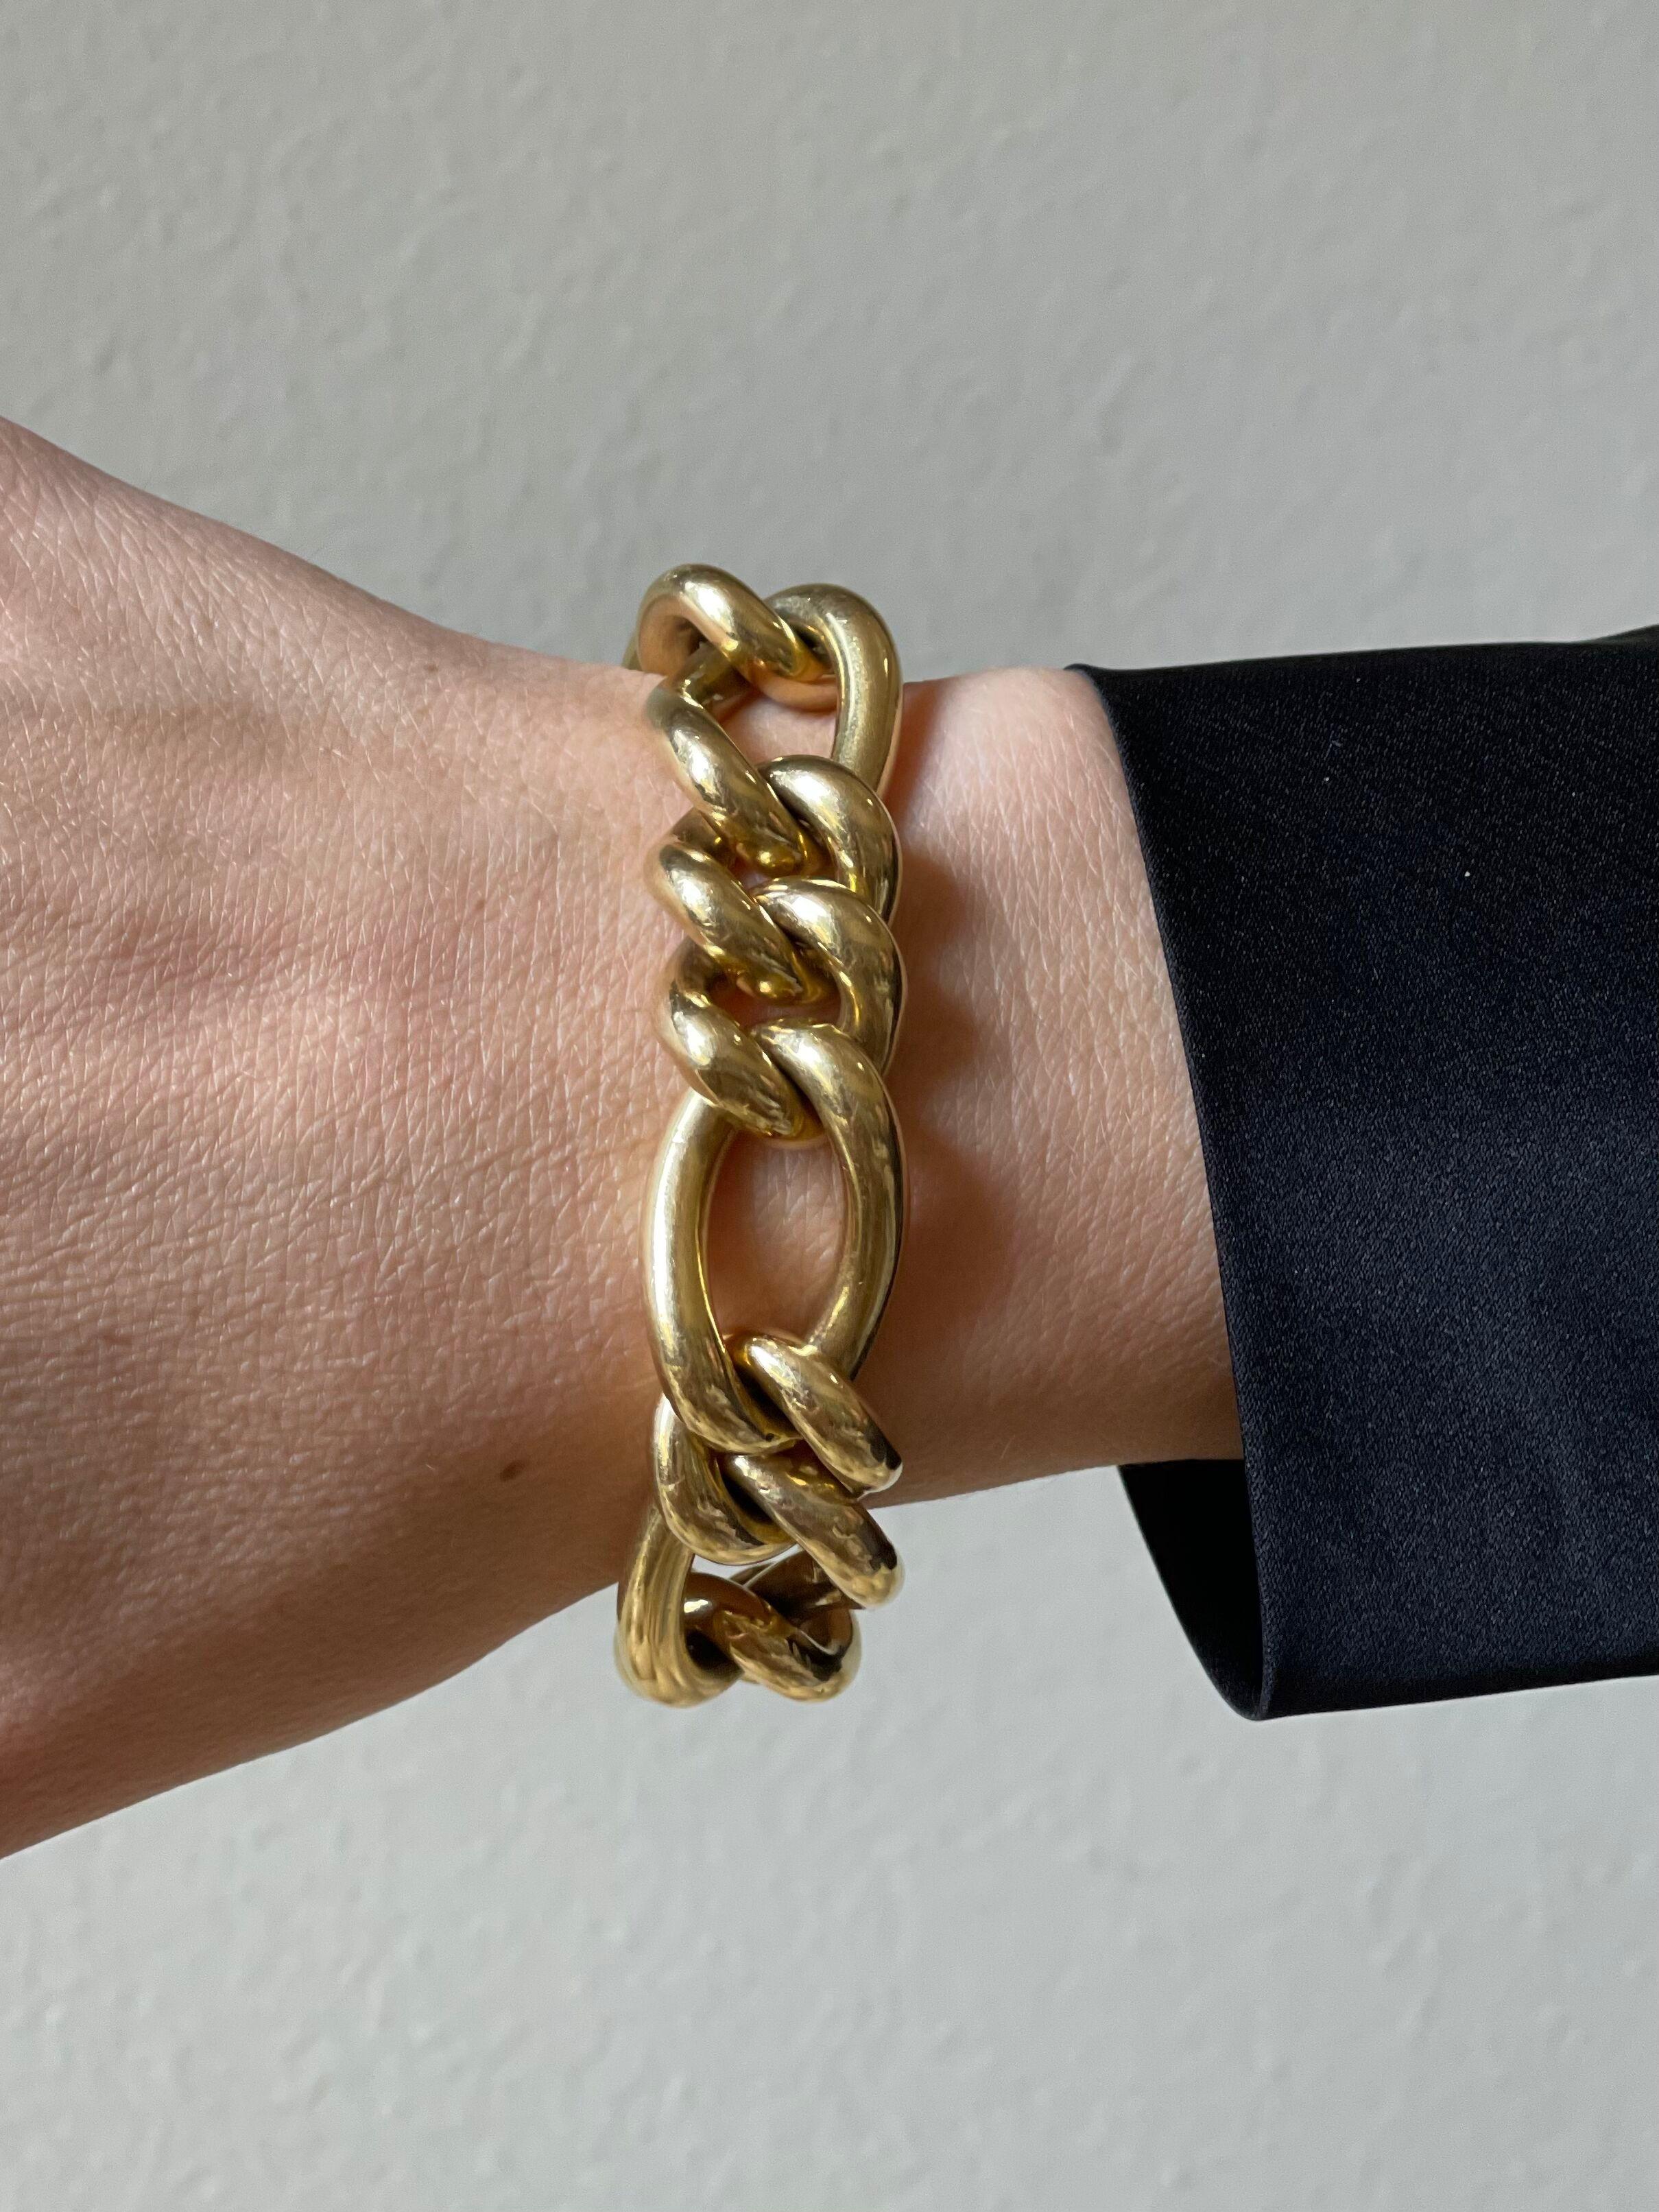 18k yellow gold chunky link bracelet by Tiffany & Co. The bracelet is 7.25